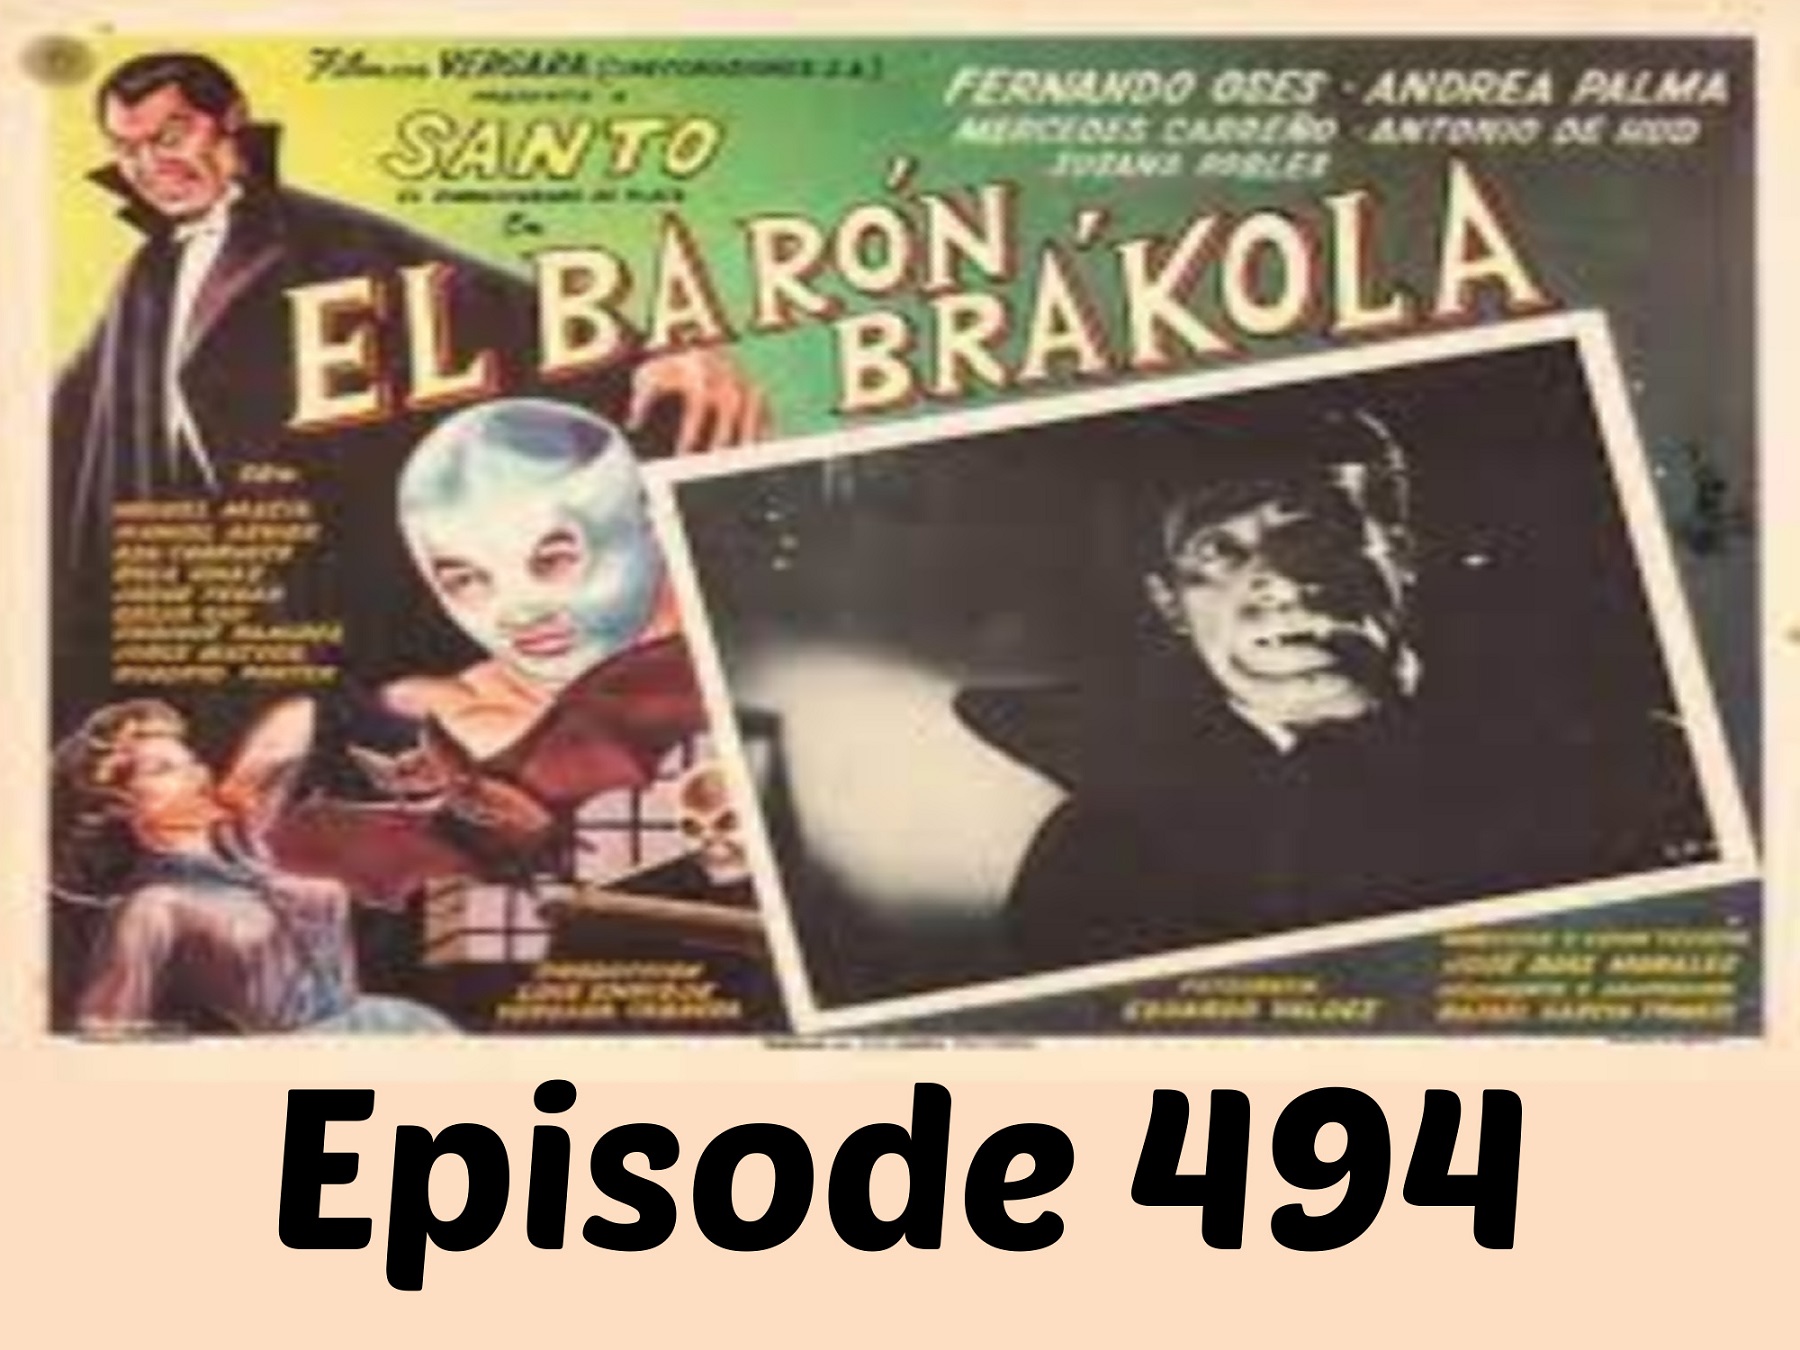 El Baron Brakola! Episode 494